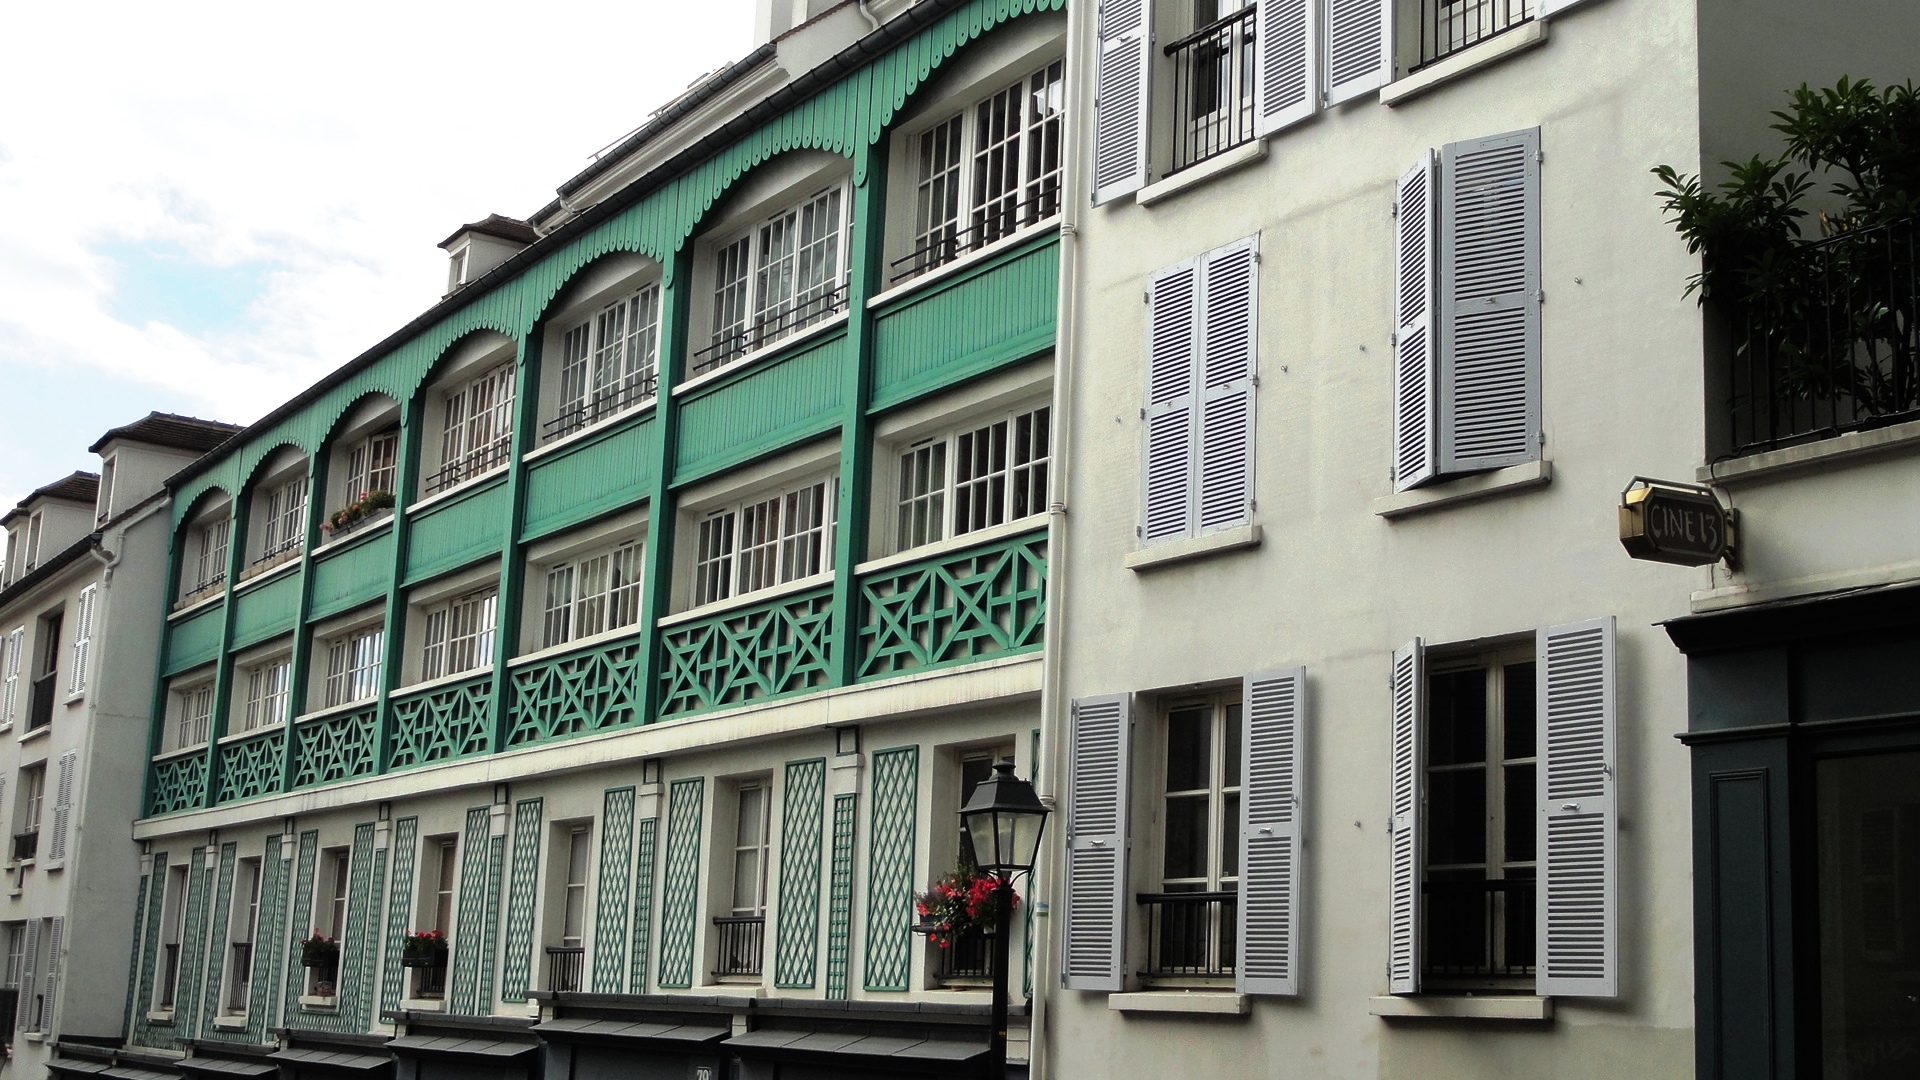 Promenade dans Montmartre - Rue Lepic